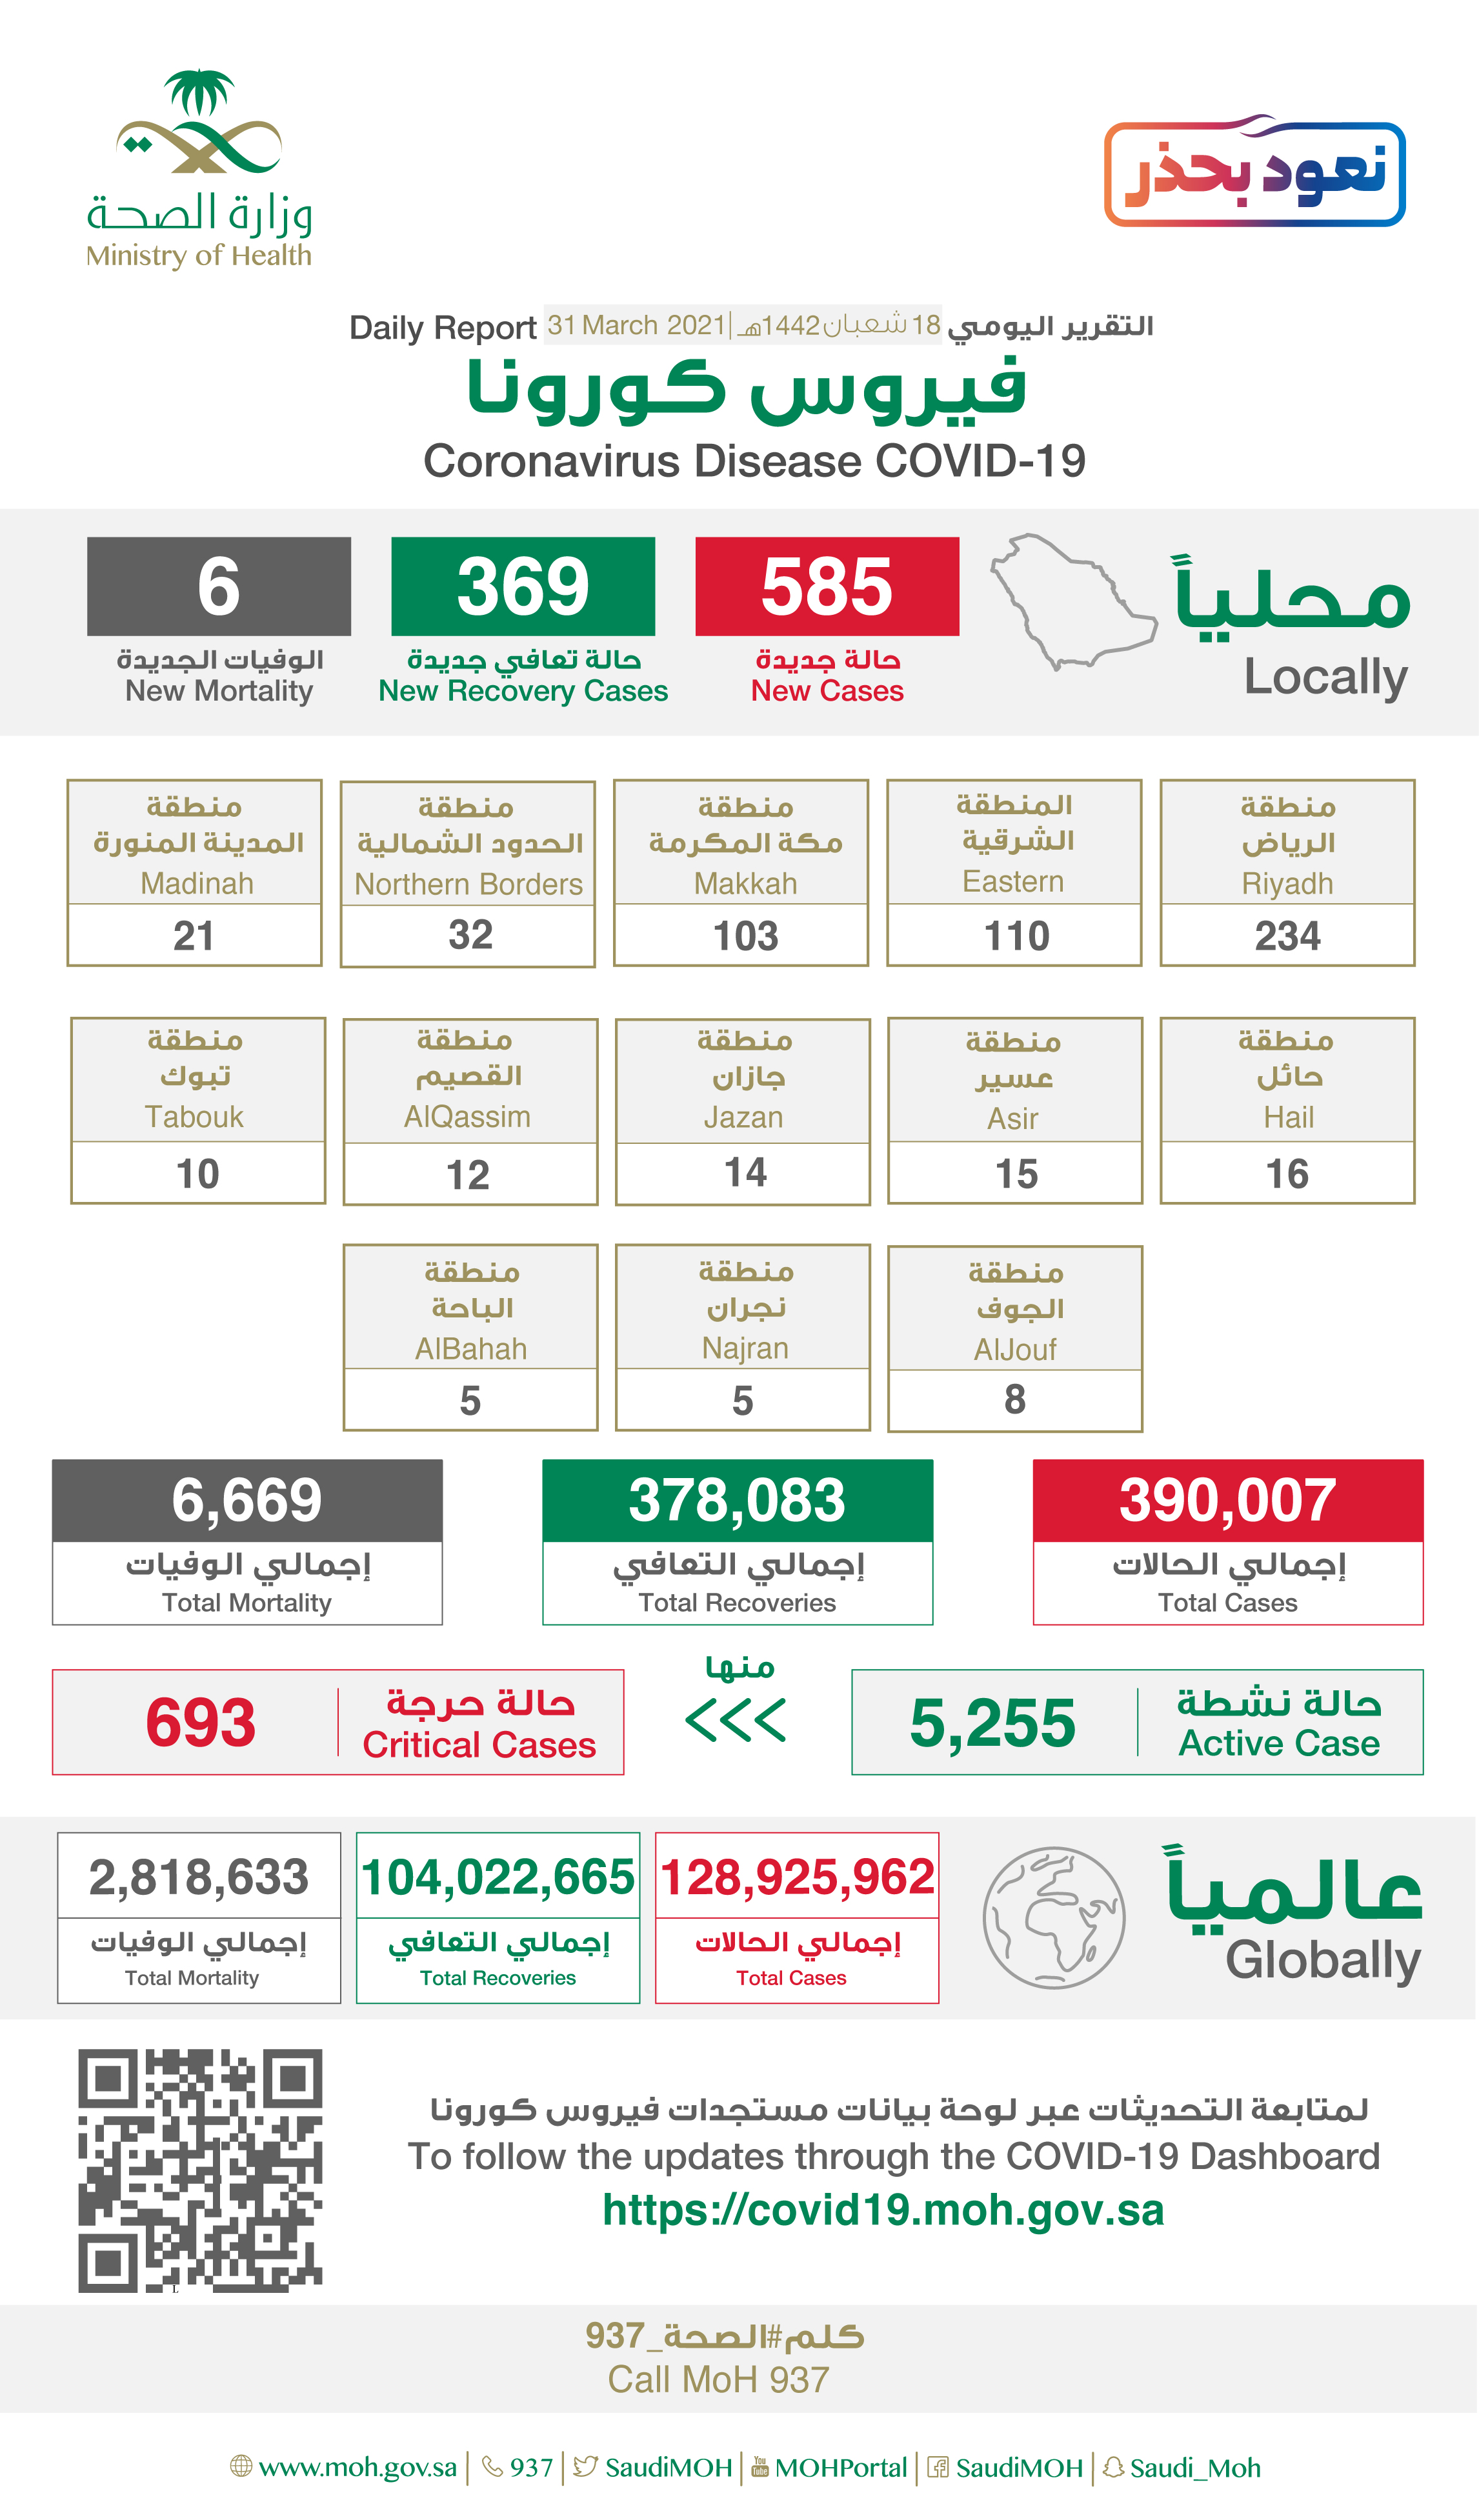 Saudi Arabia Coronavirus : Total Cases :390,007 , New Cases : 585, Cured : 378,083 , Deaths: 6,669, Active Cases : 5,255